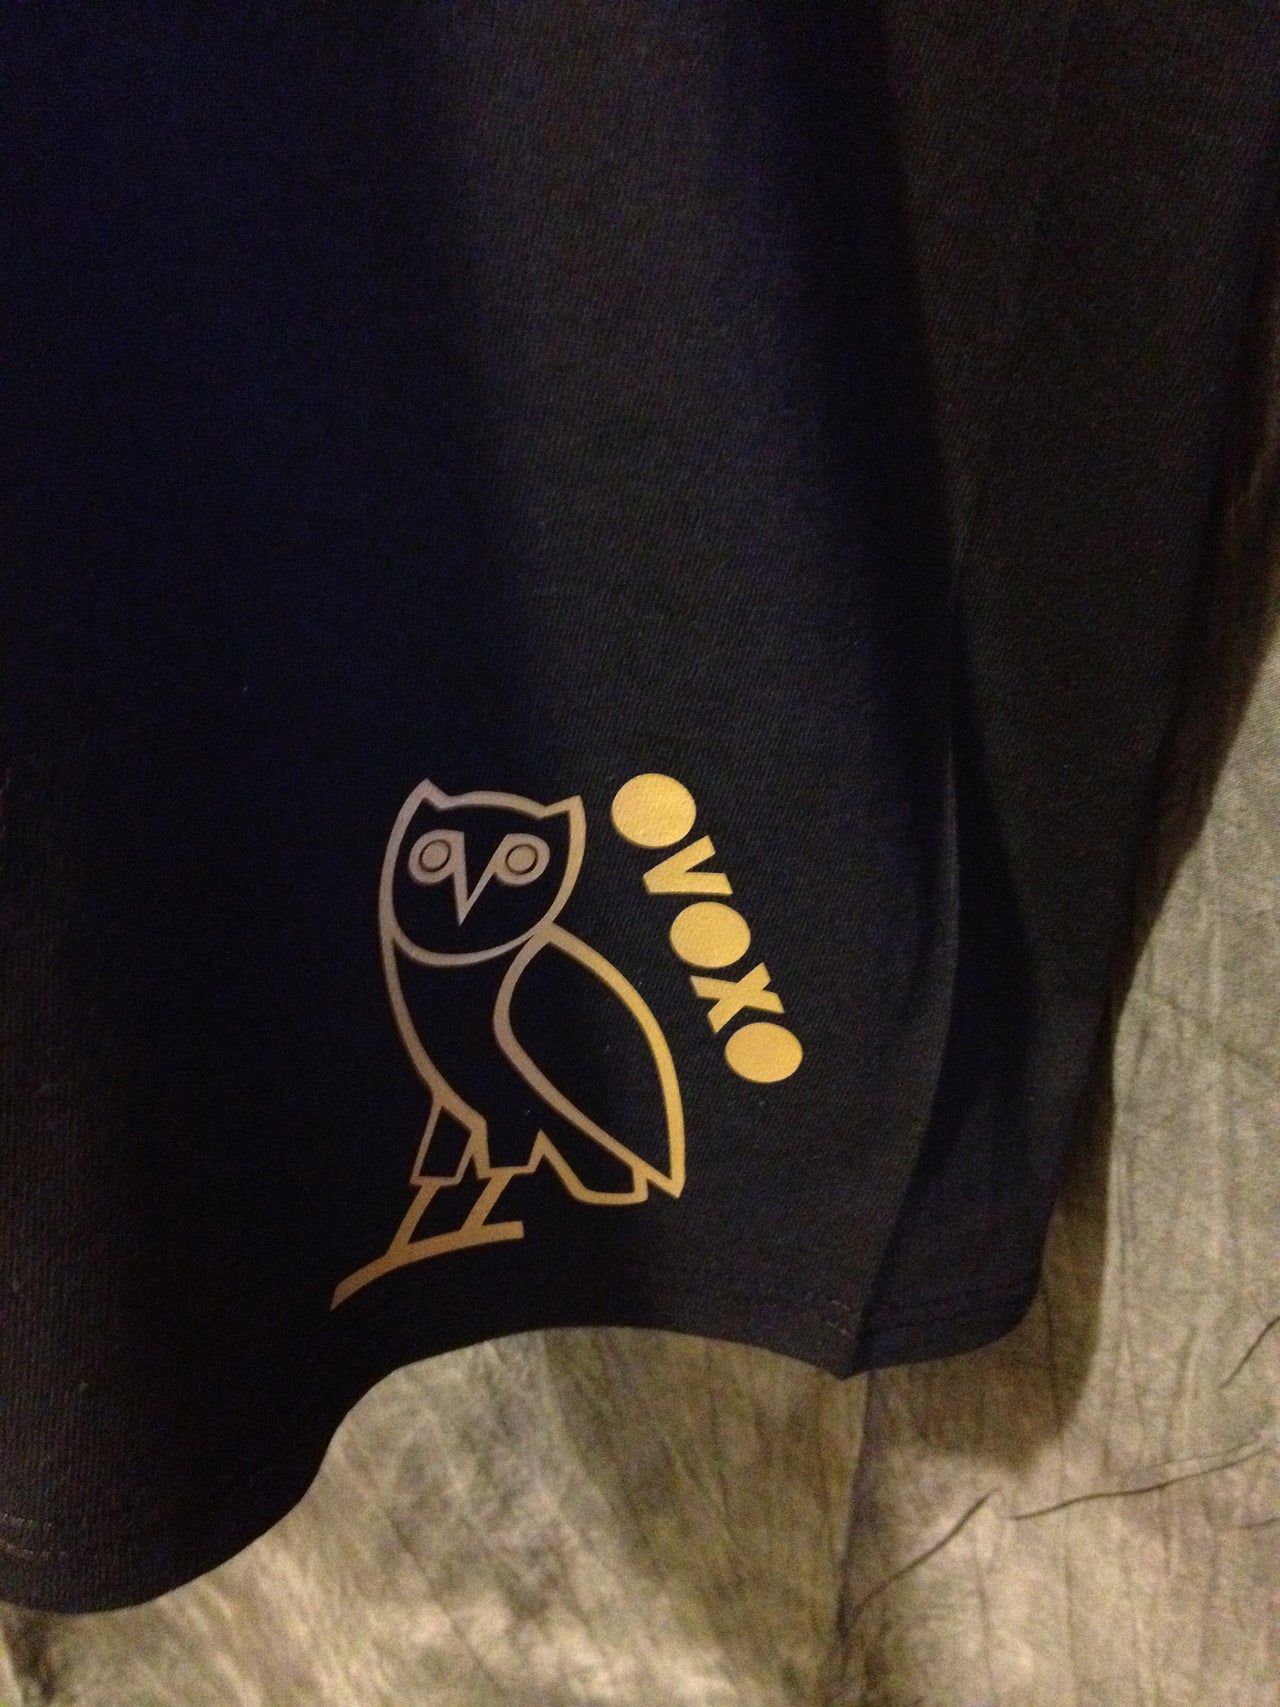 Ovo Drake October's Very Own Ovoxo Owl Gang Girls Tshirt: Gold Print on Black Womens Tshirt - TshirtNow.net - 3